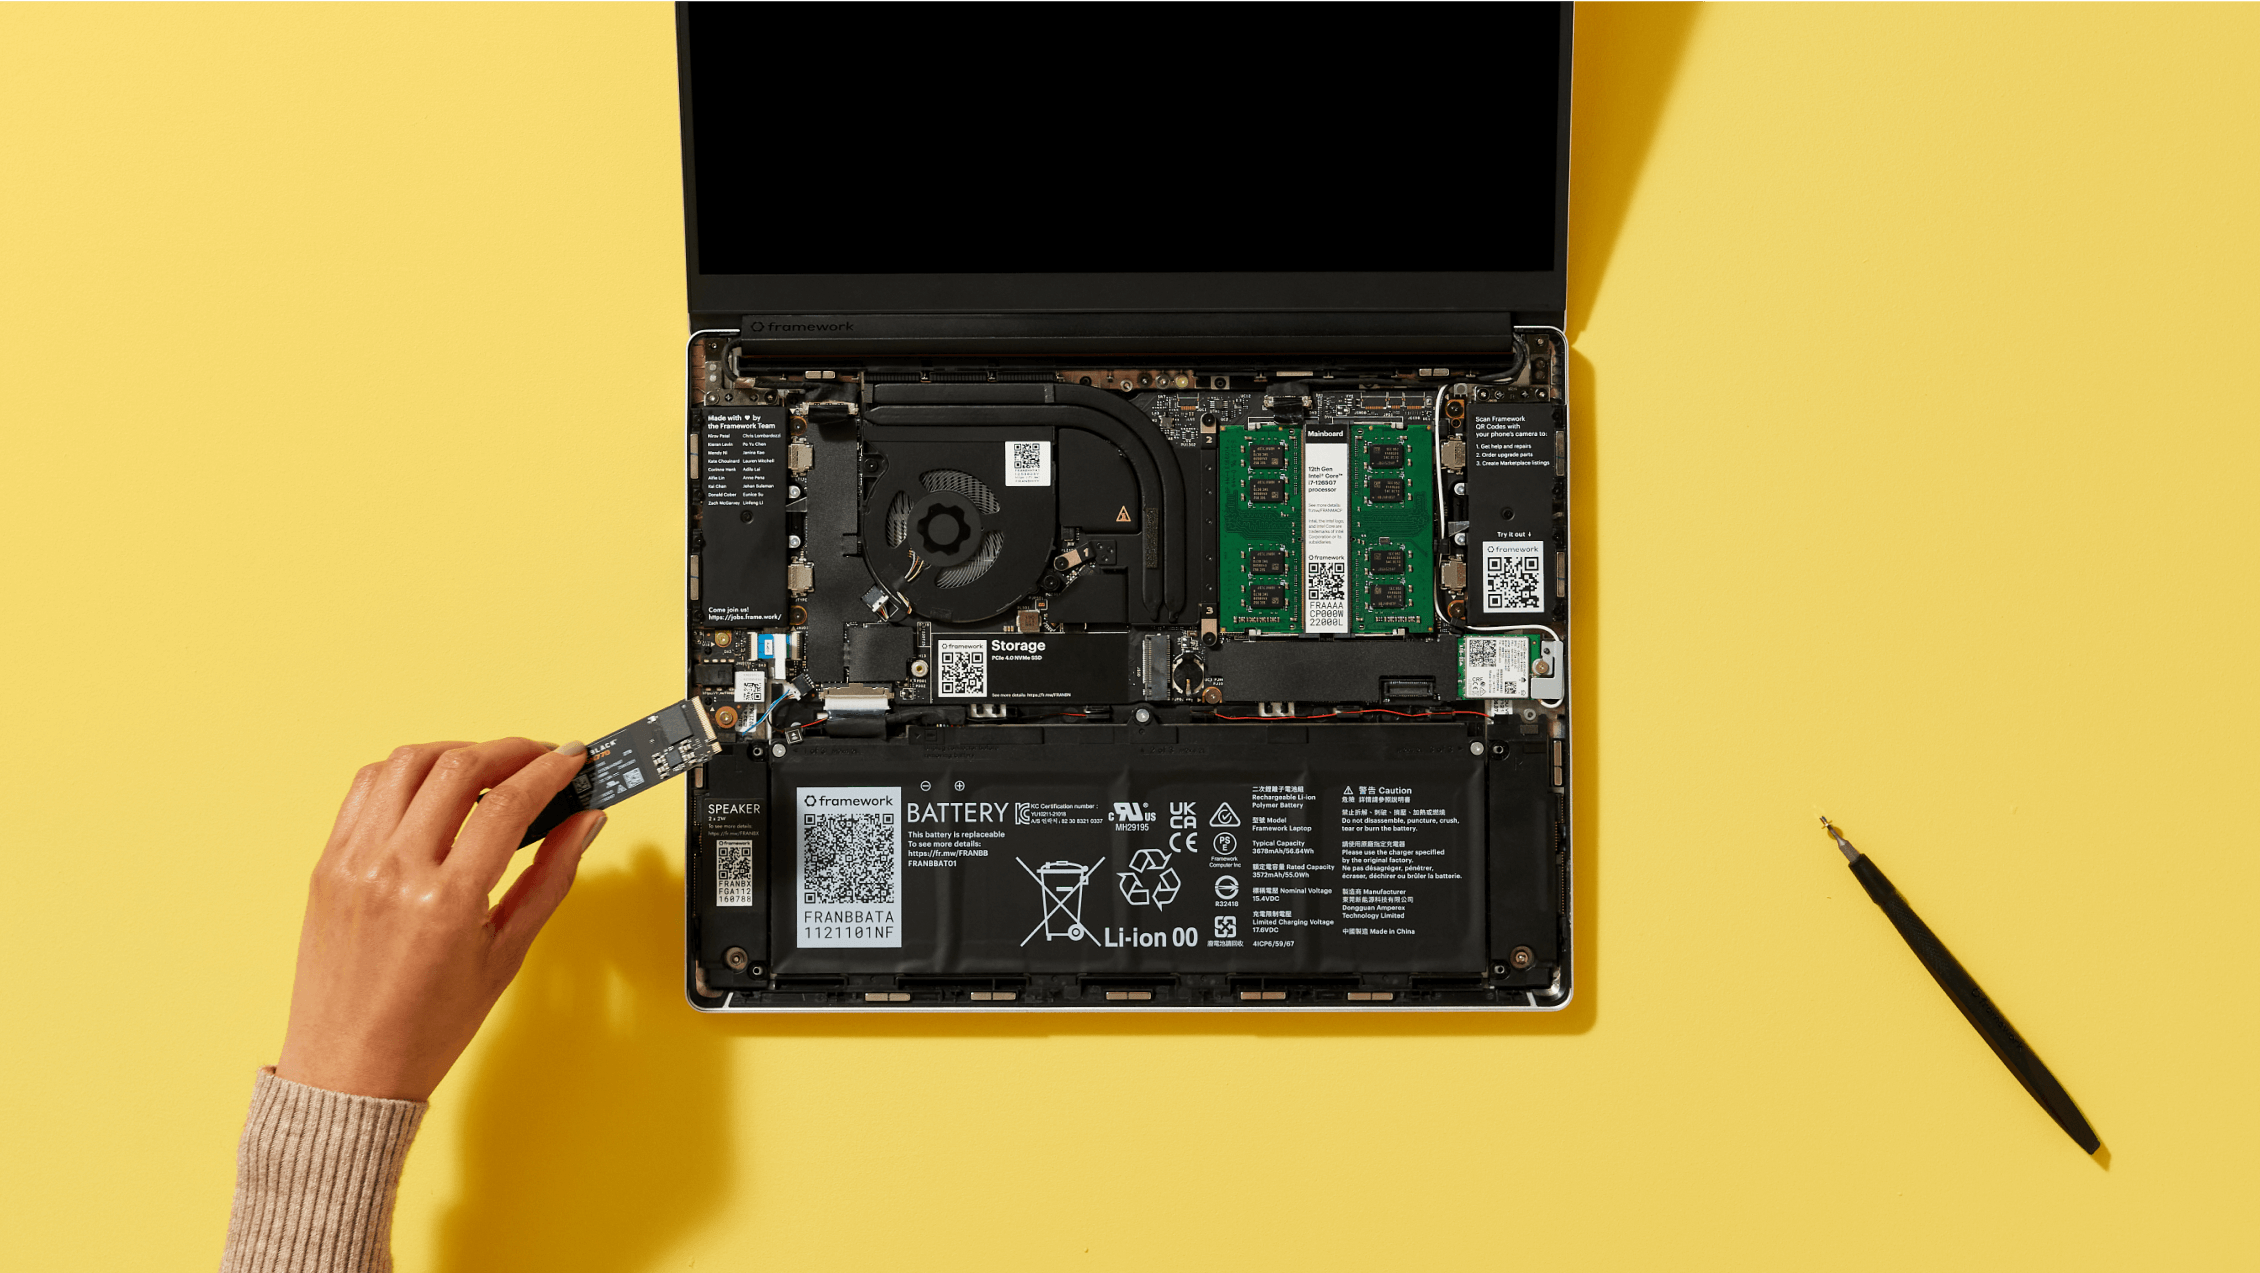 Upgrading memory and storage on Framework Laptop